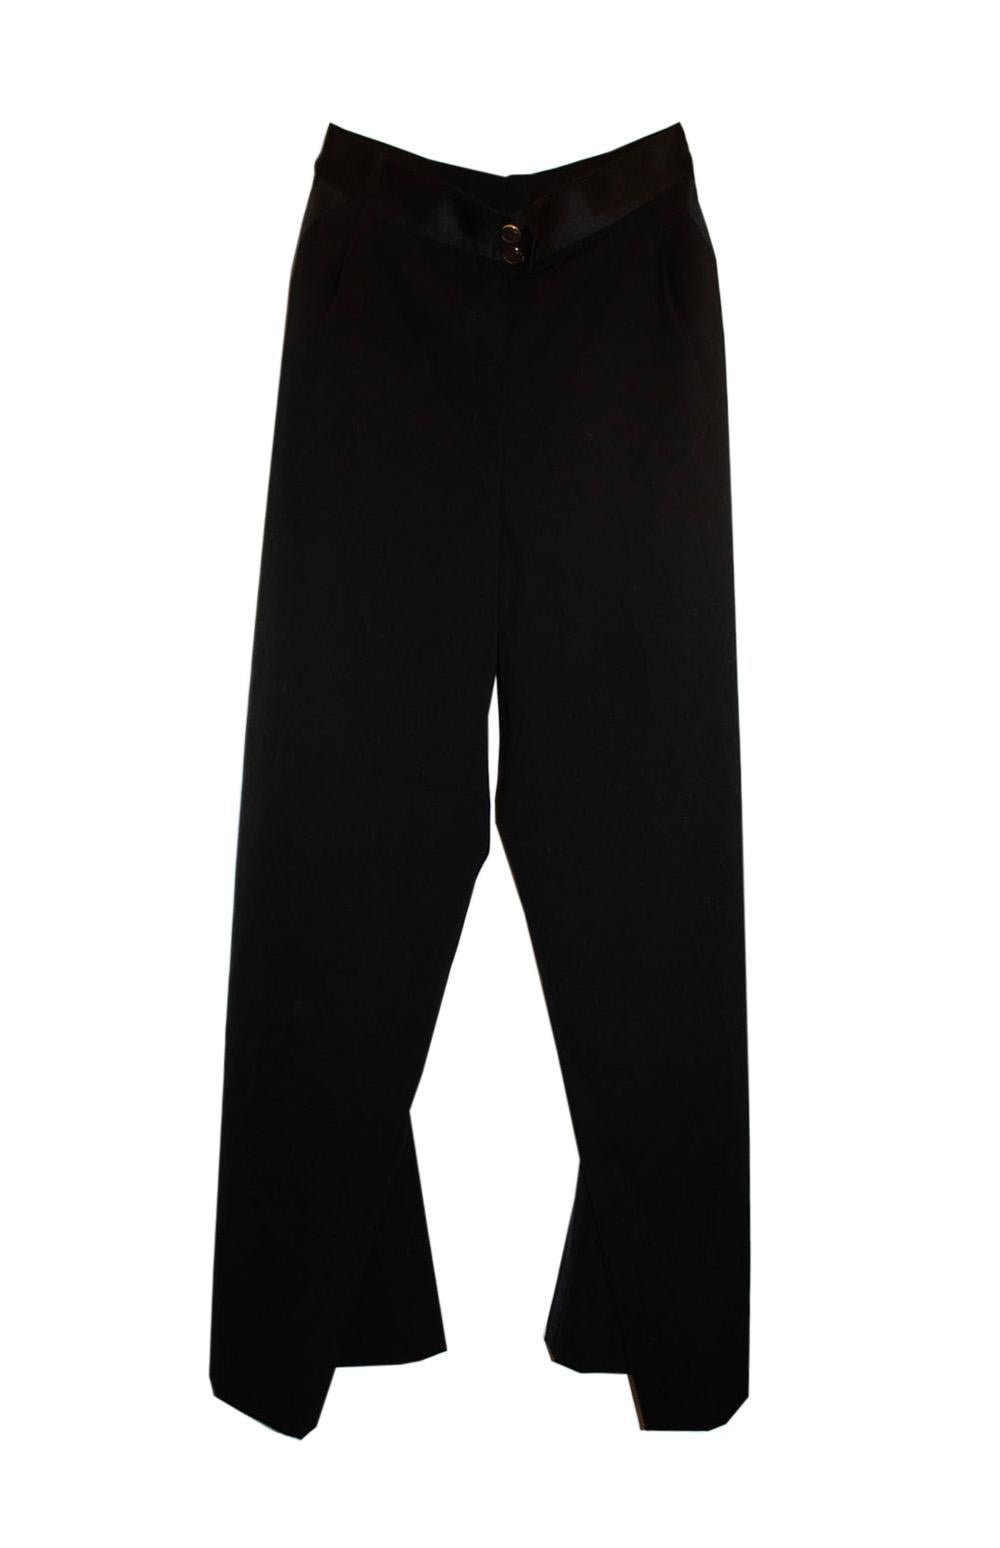 Women's or Men's Vintage Chanel Black Tuxedo Pants /Trousers For Sale